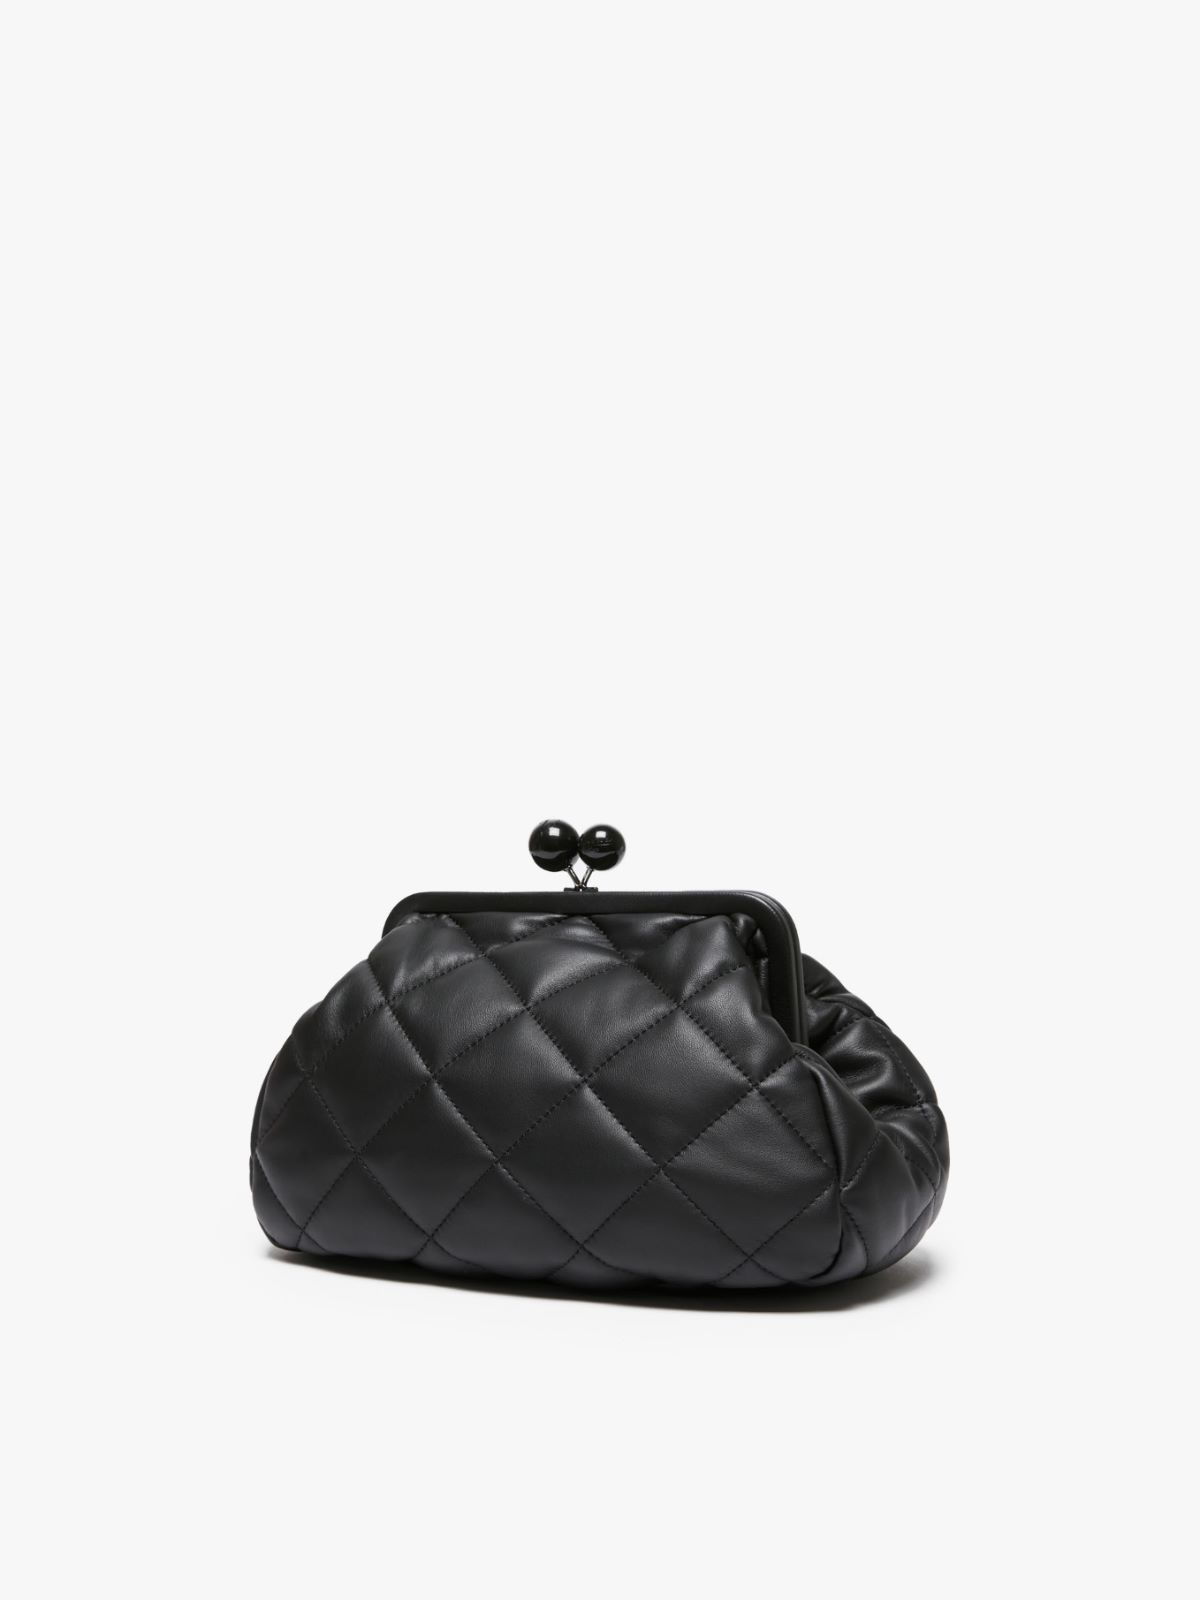 Medium Pasticcino Bag in nappa leather - BLACK - Weekend Max Mara - 2